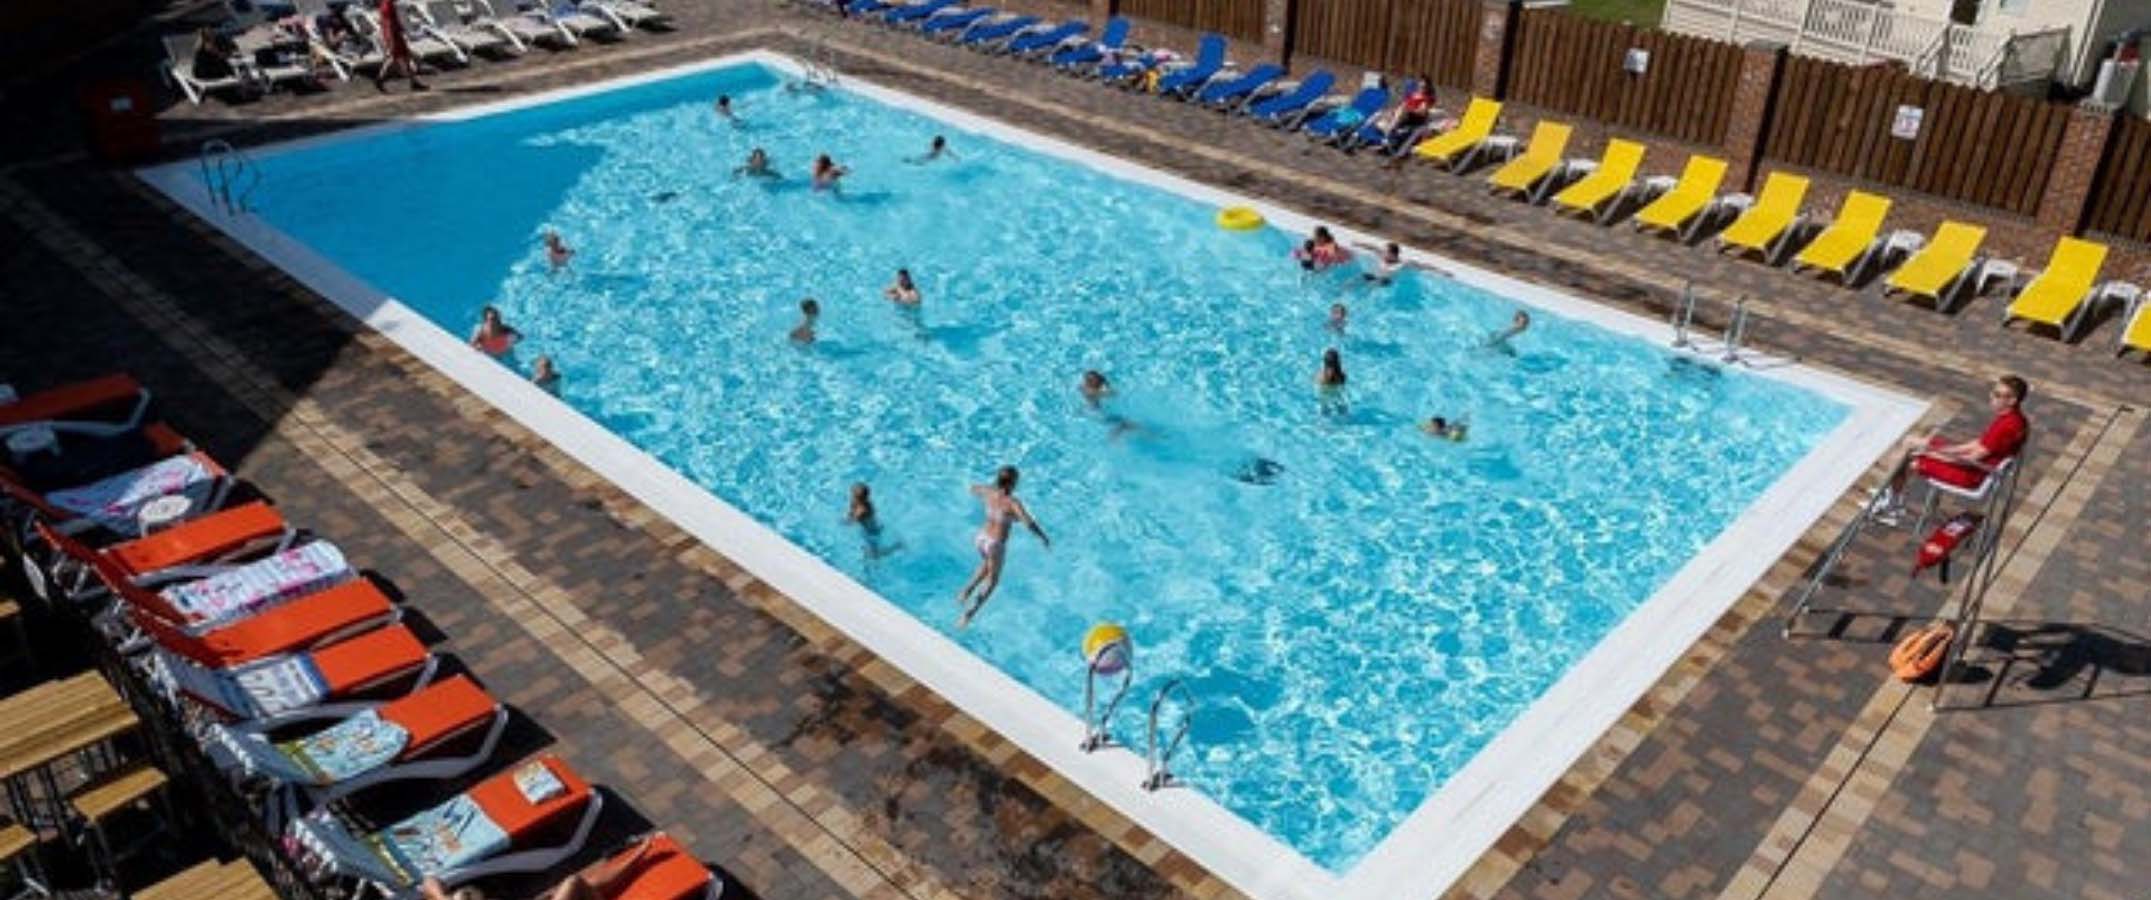 Bunn Leisure - Pool